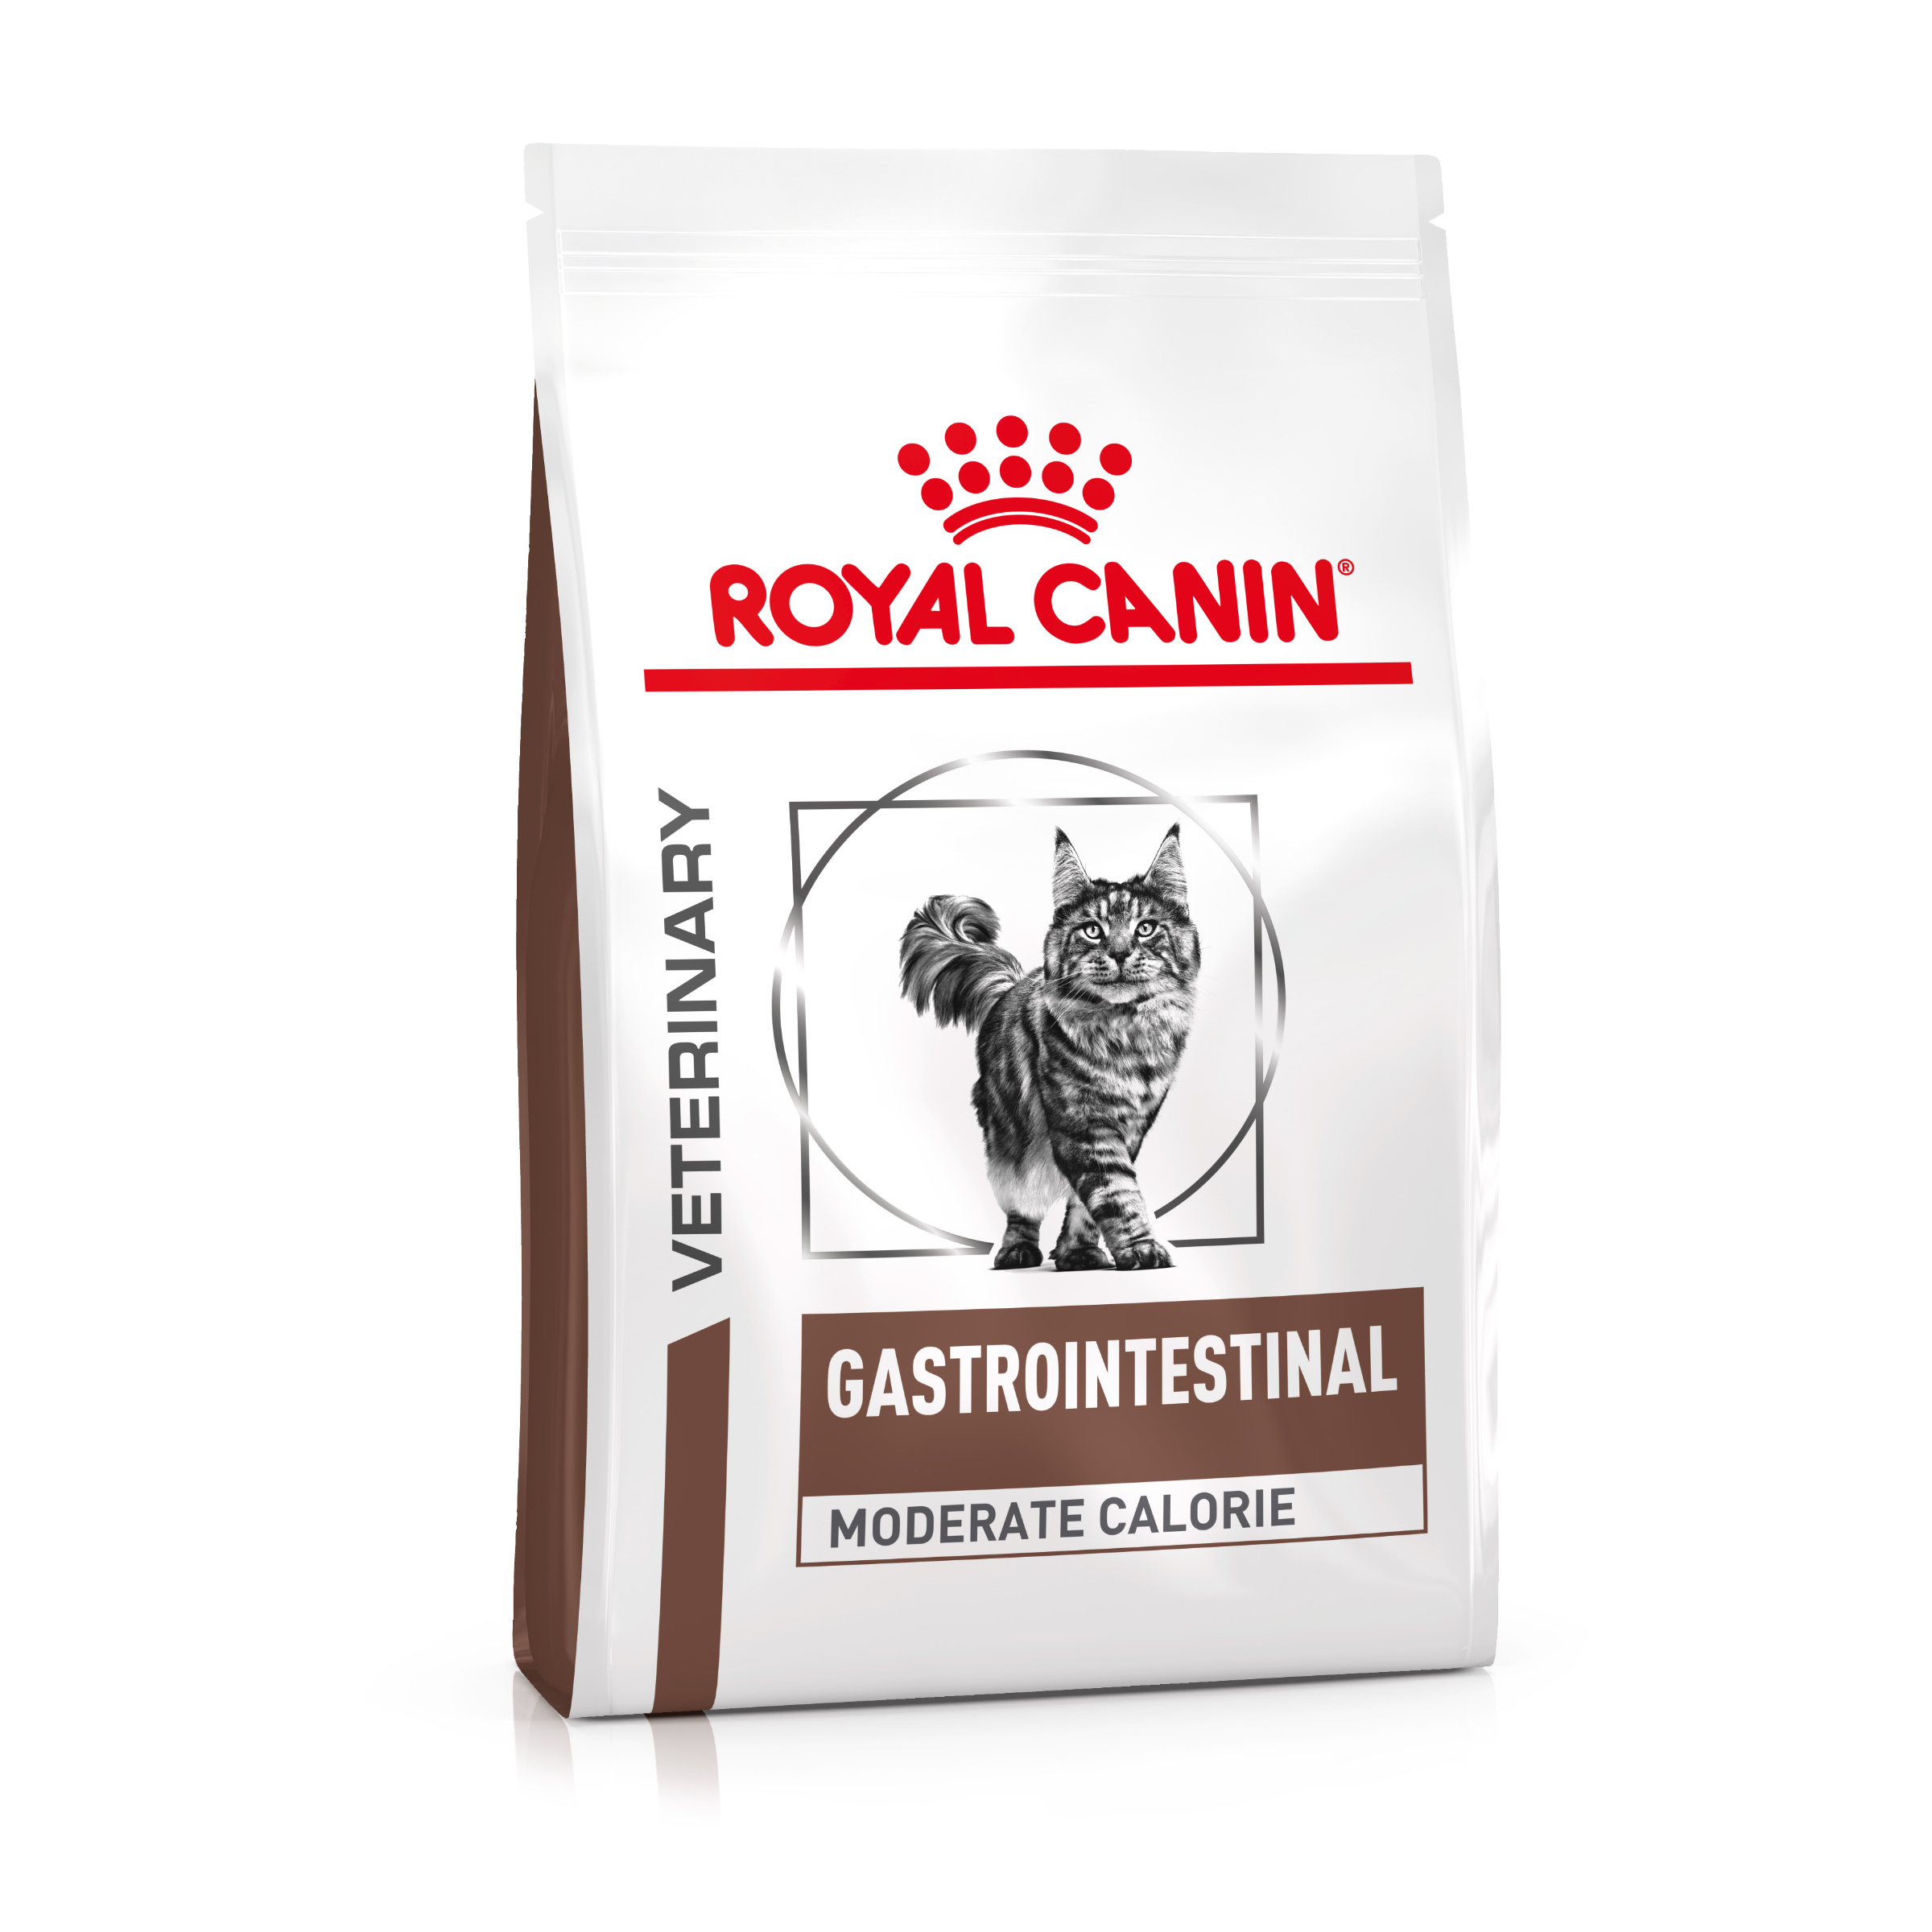 ROYAL CANIN Veterinary GASTROINTESTINAL MODERATE CALORIE Trockenfutter für Katzen 2 kg (Katze)